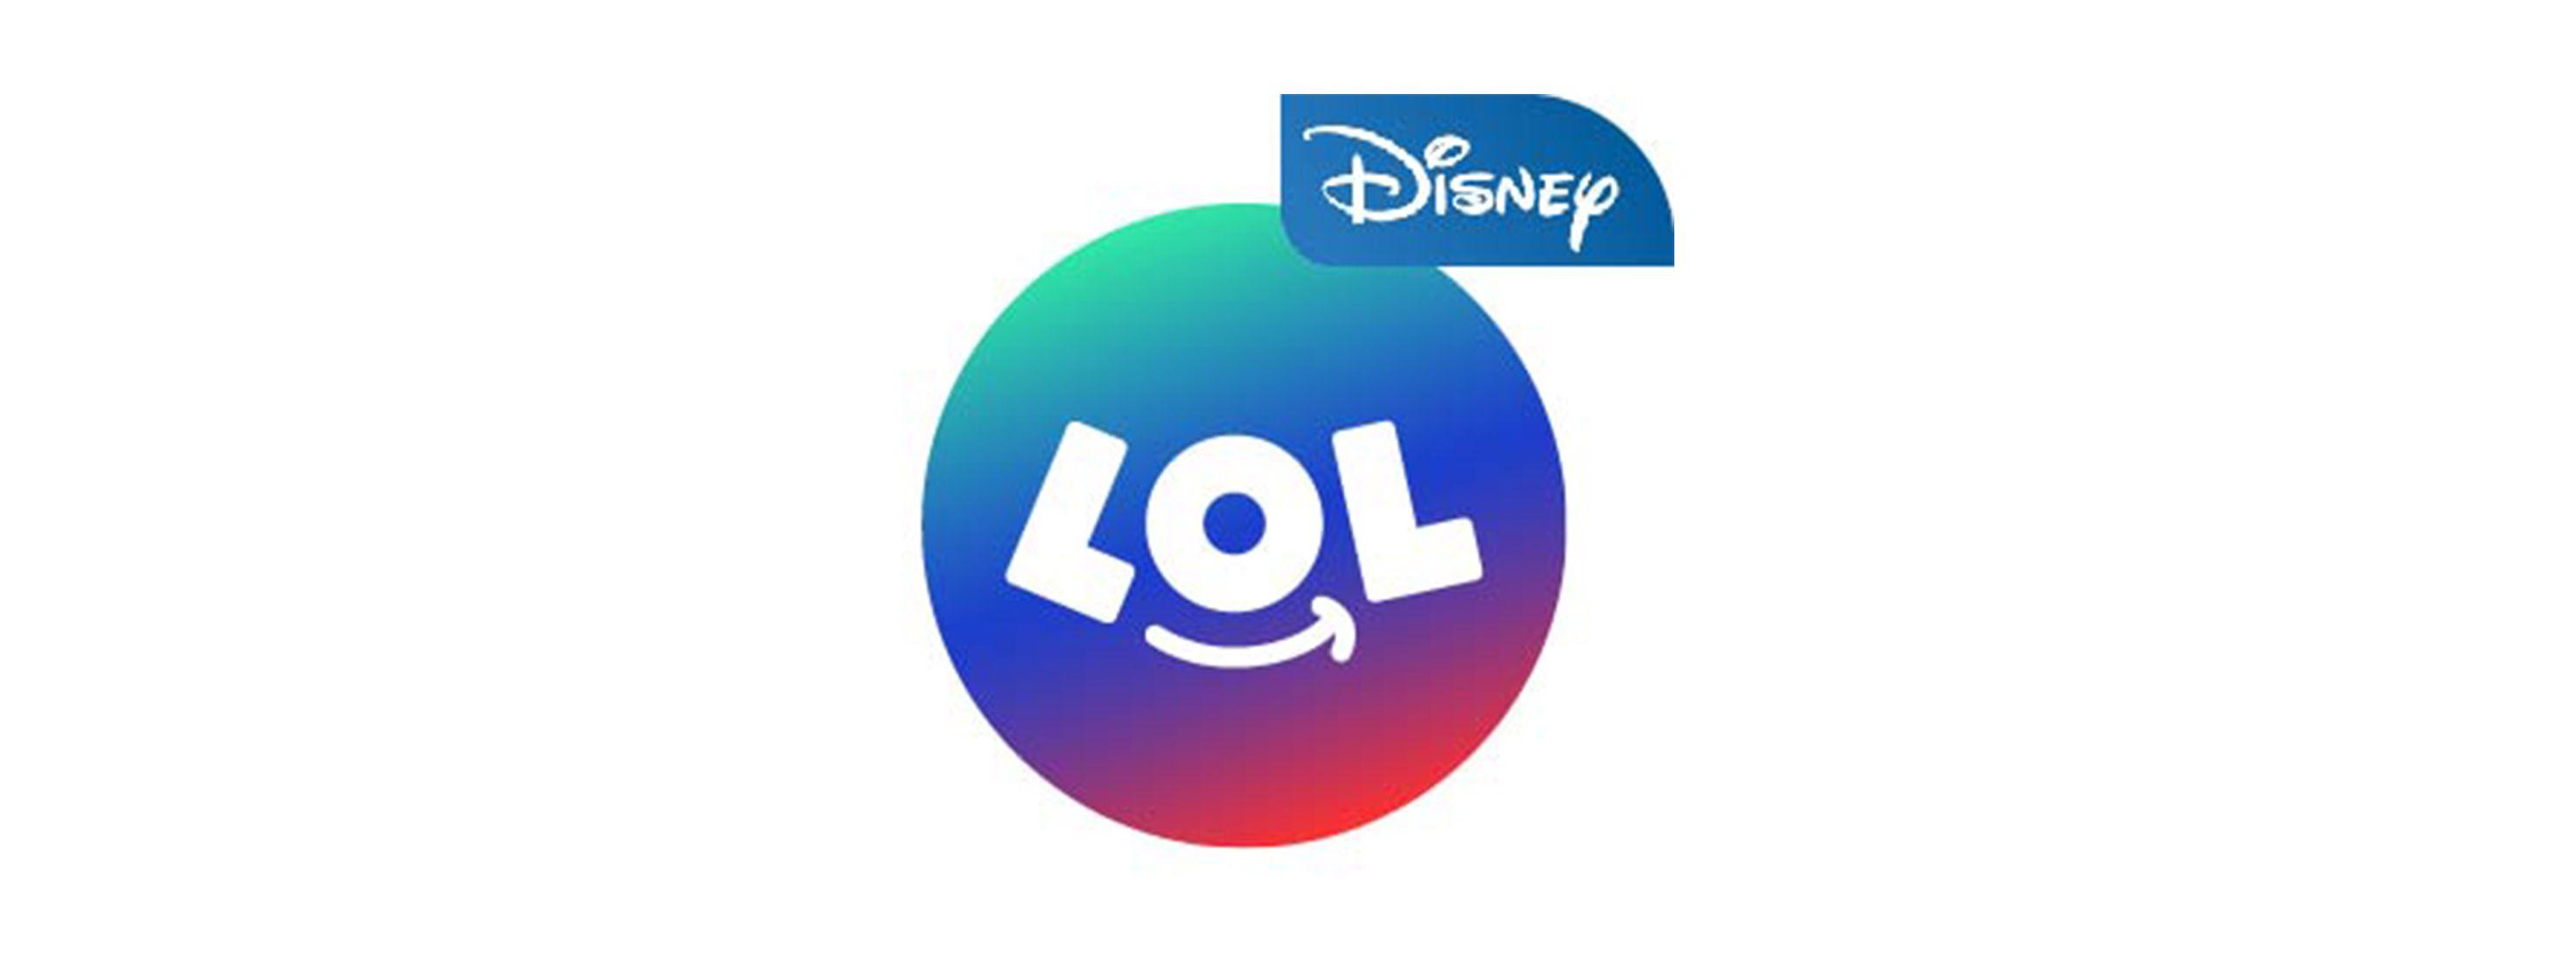 Disney App Logo - Disney Launches 